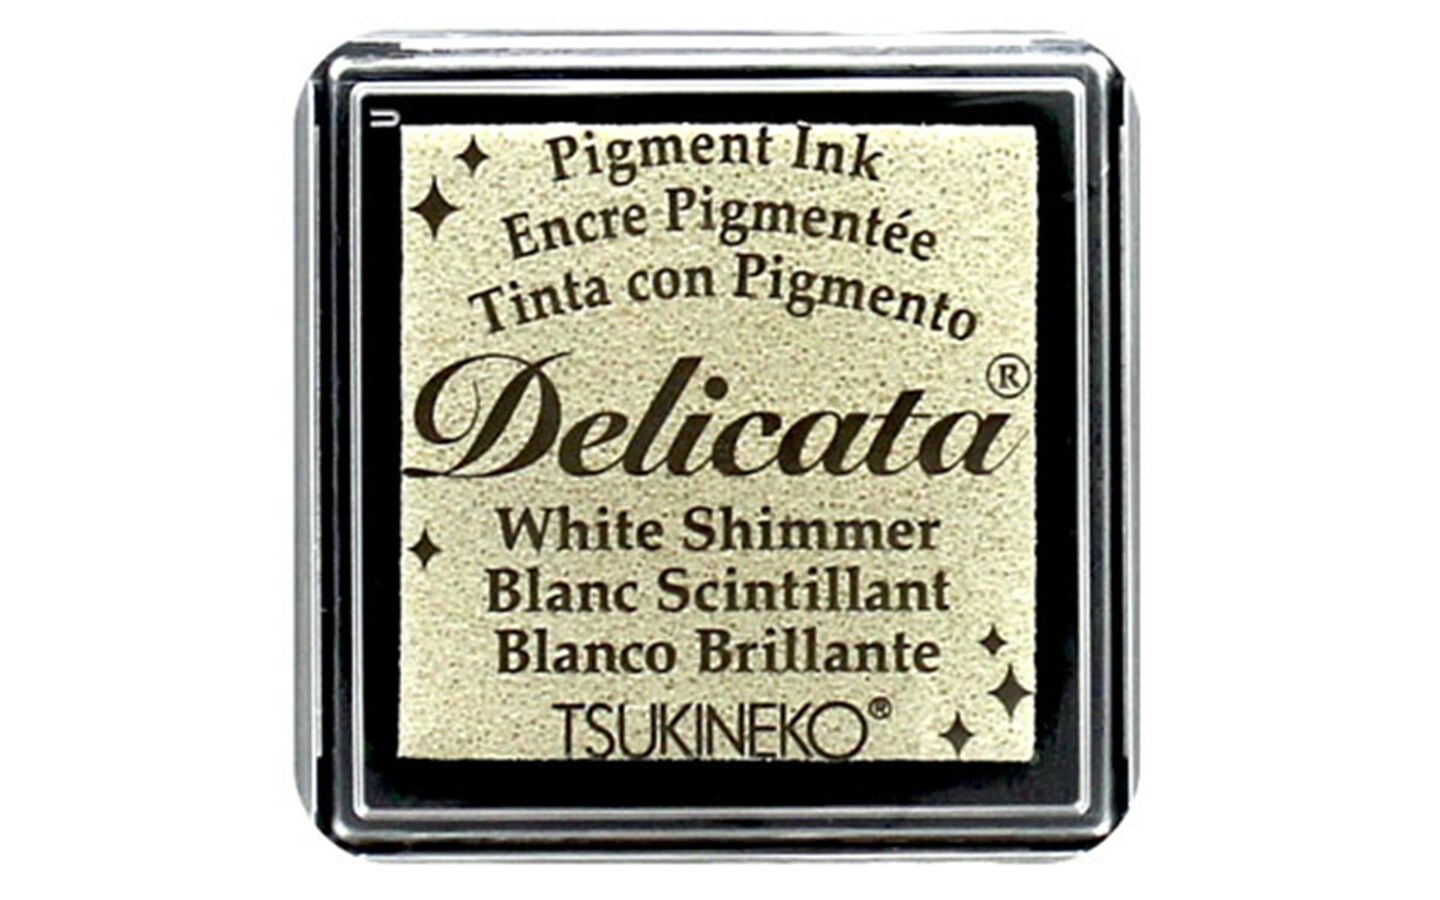 Delicata Metallic Inks